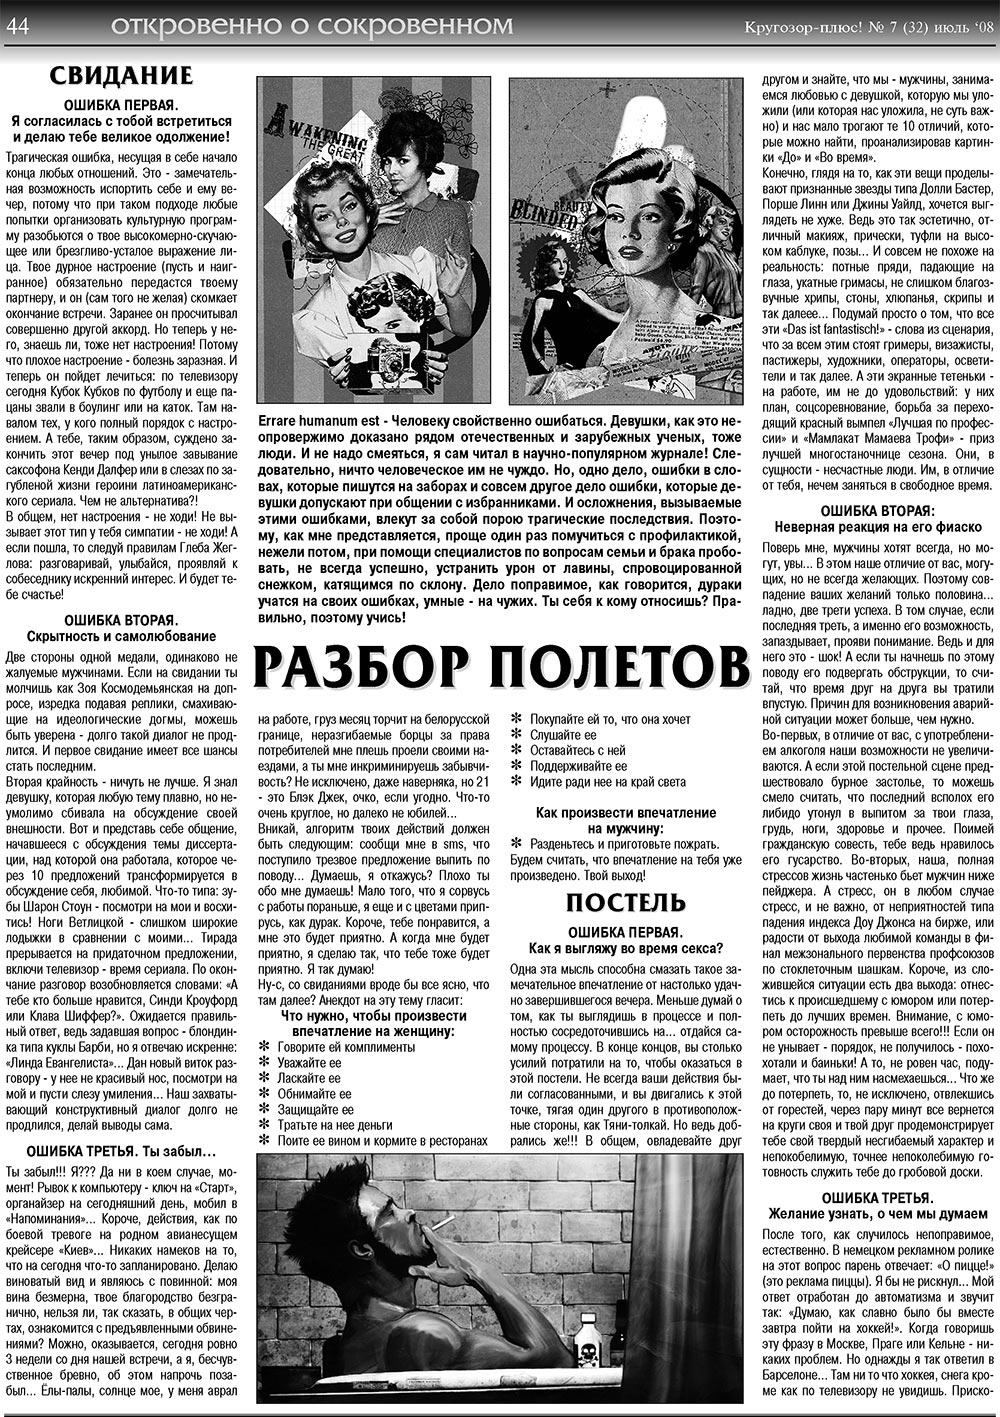 Кругозор плюс! (газета). 2008 год, номер 7, стр. 44